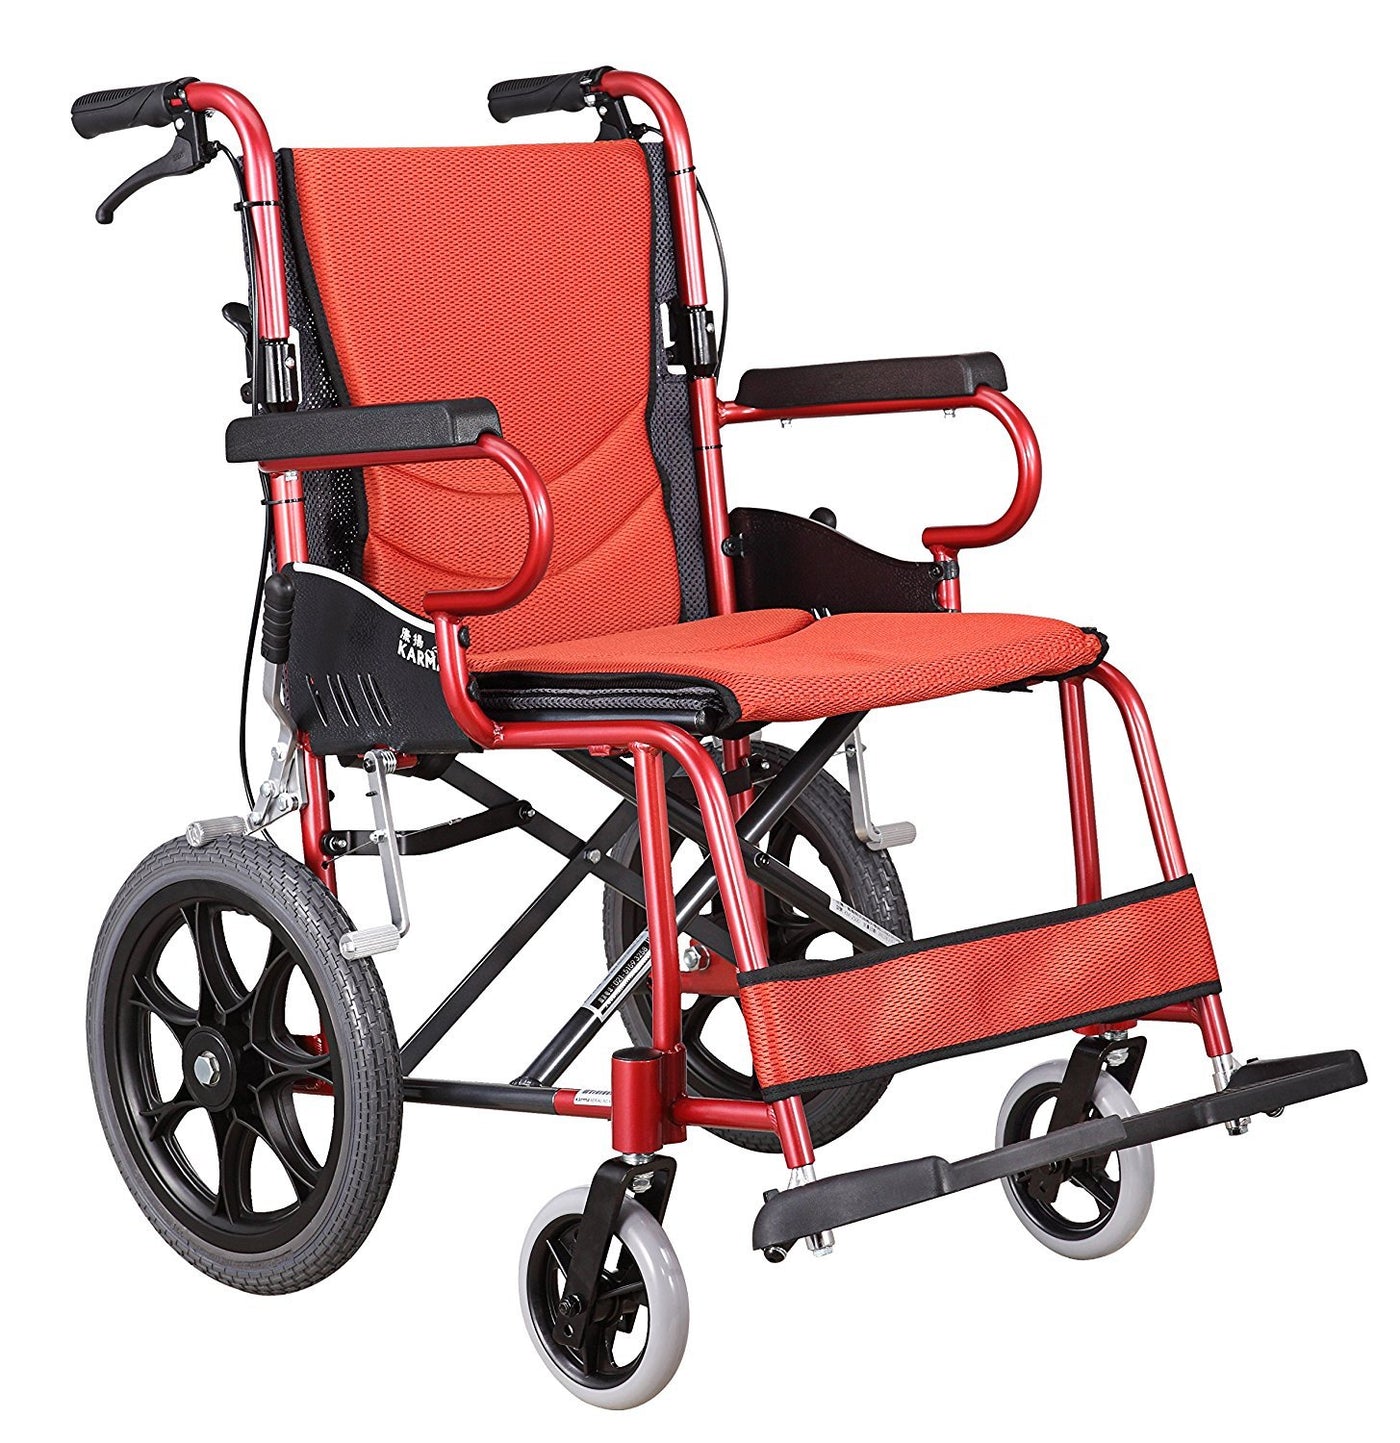 Karma KM 2500 Ultra Light Wheelchair